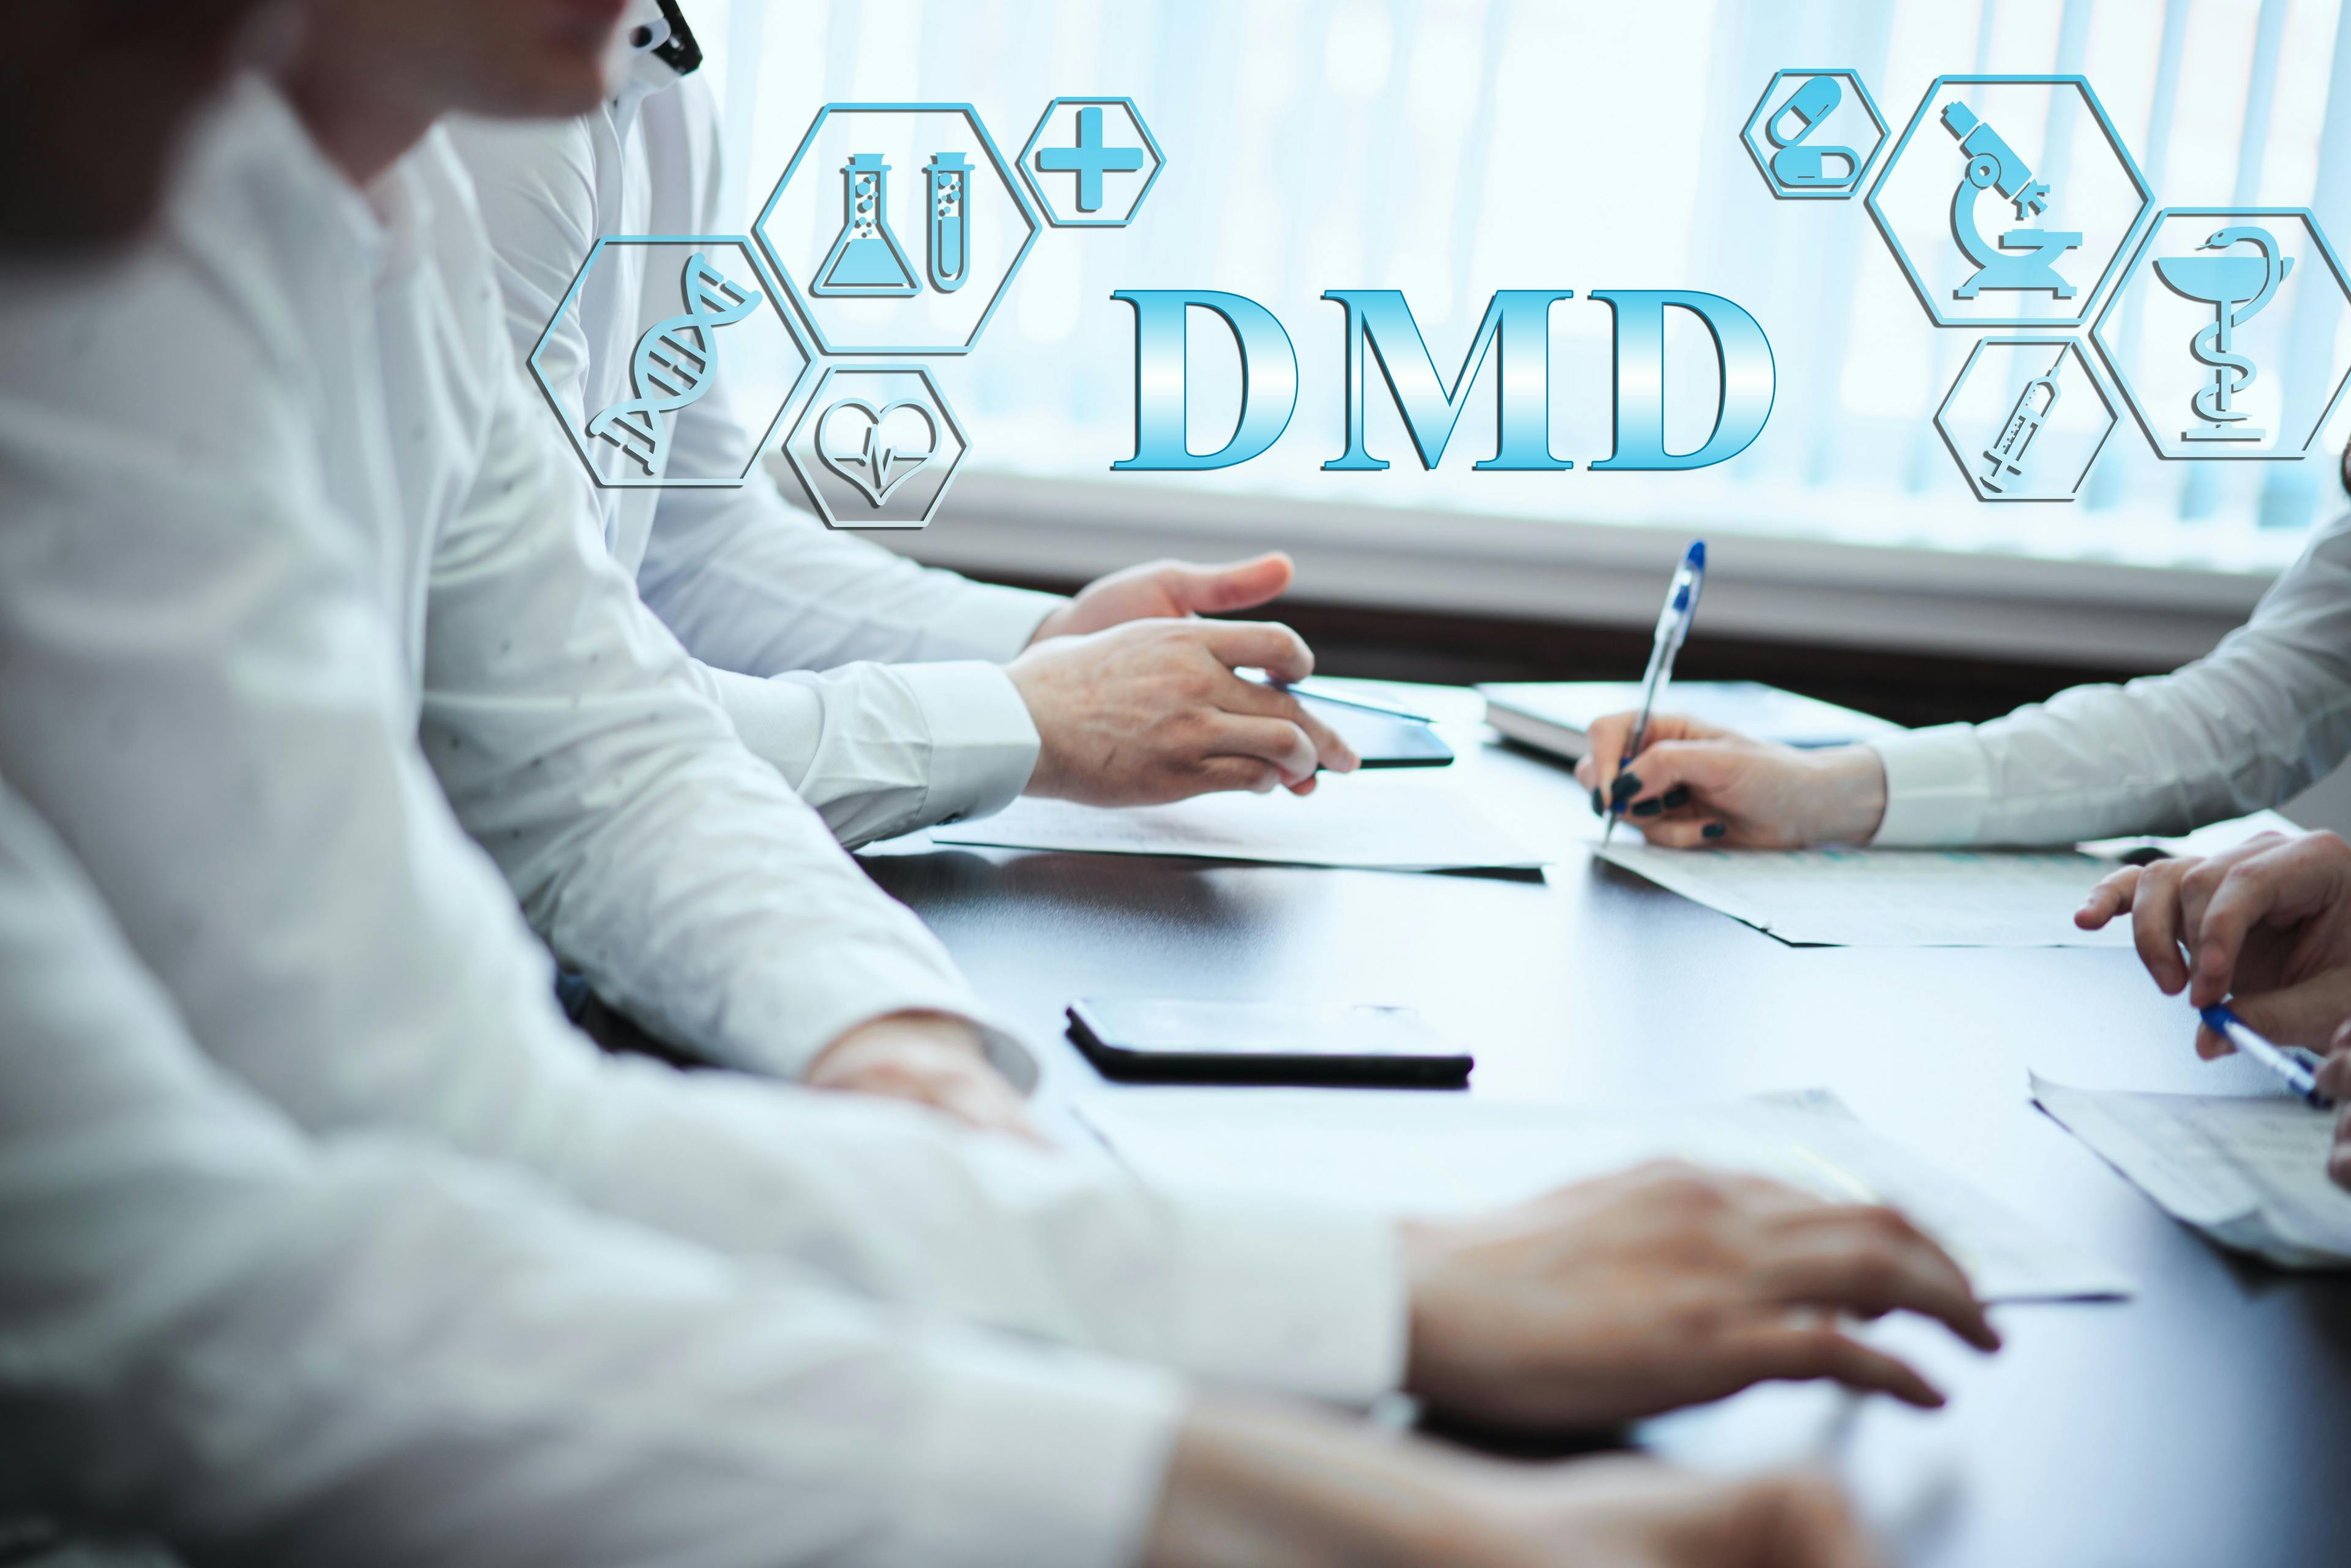 Doctors planning DMD treatment | Image credit: OlegKachura-stock.adobe.com